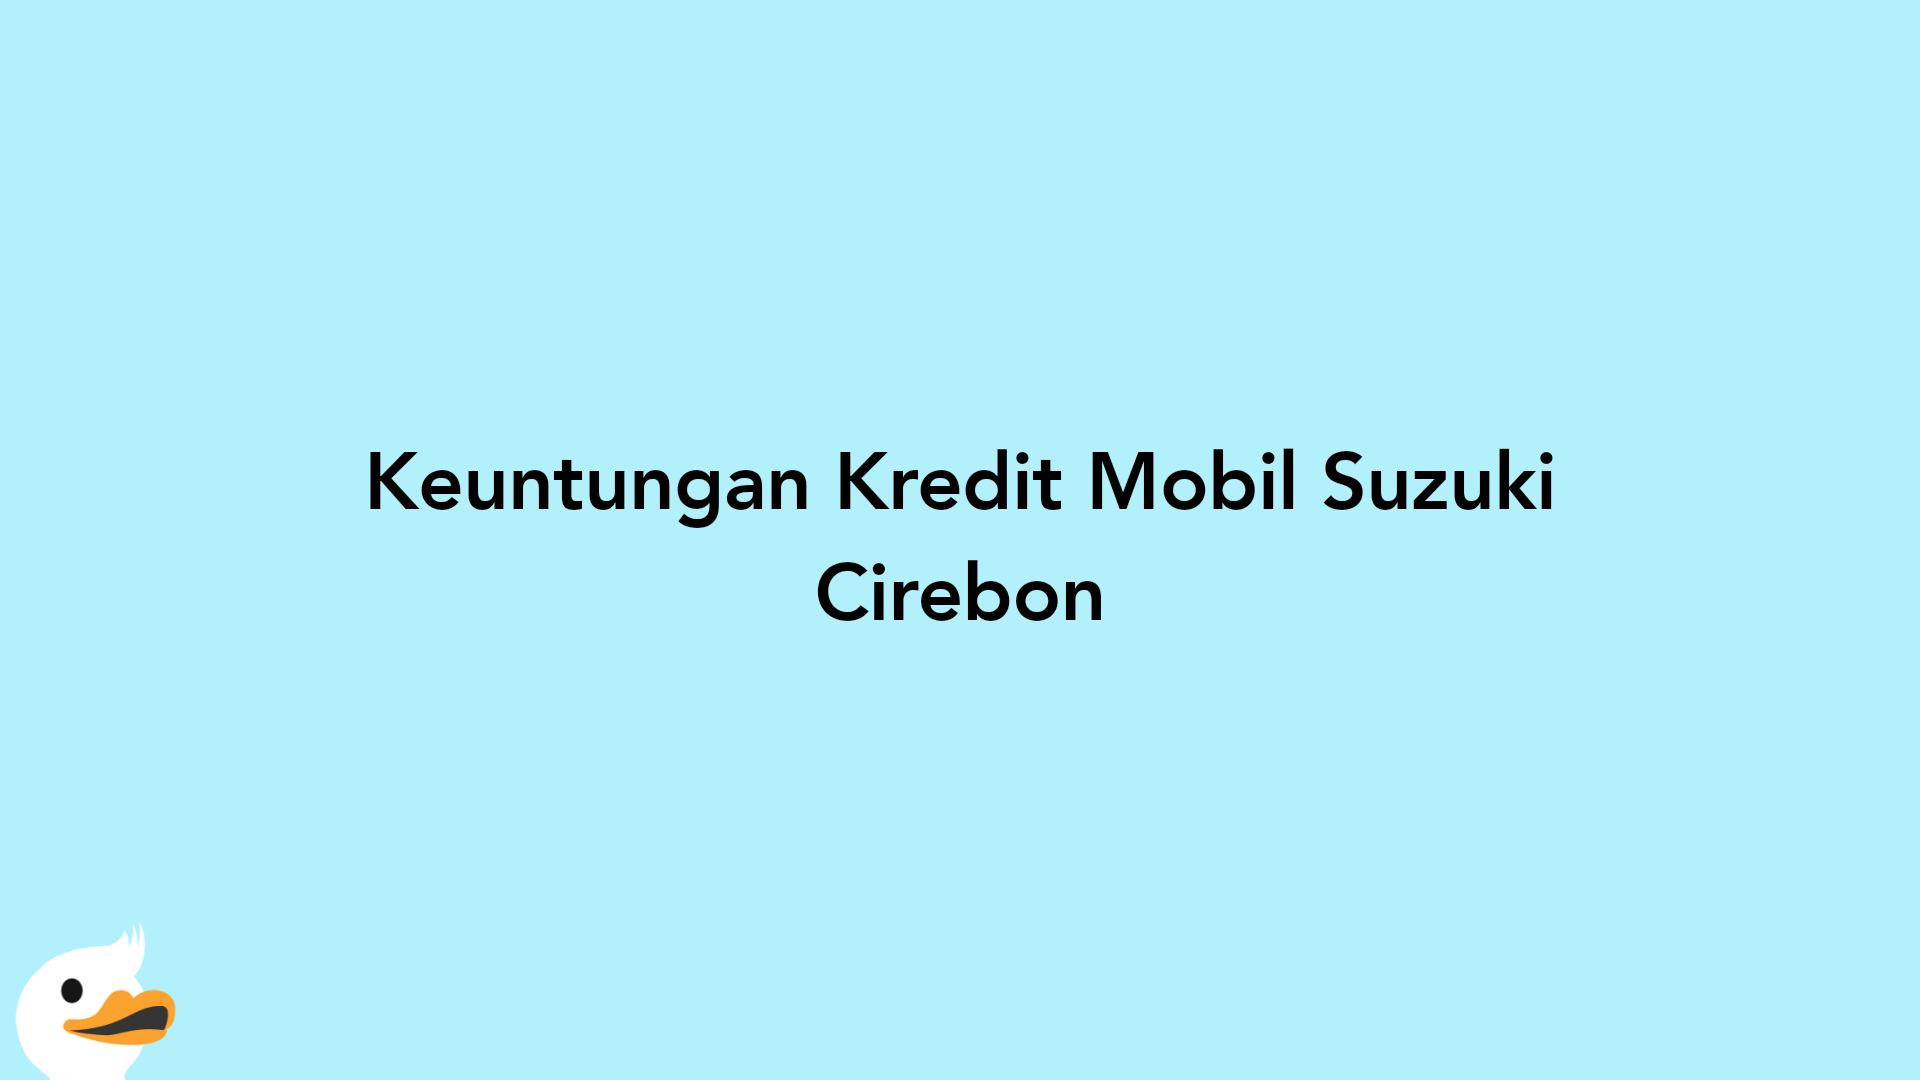 Keuntungan Kredit Mobil Suzuki Cirebon